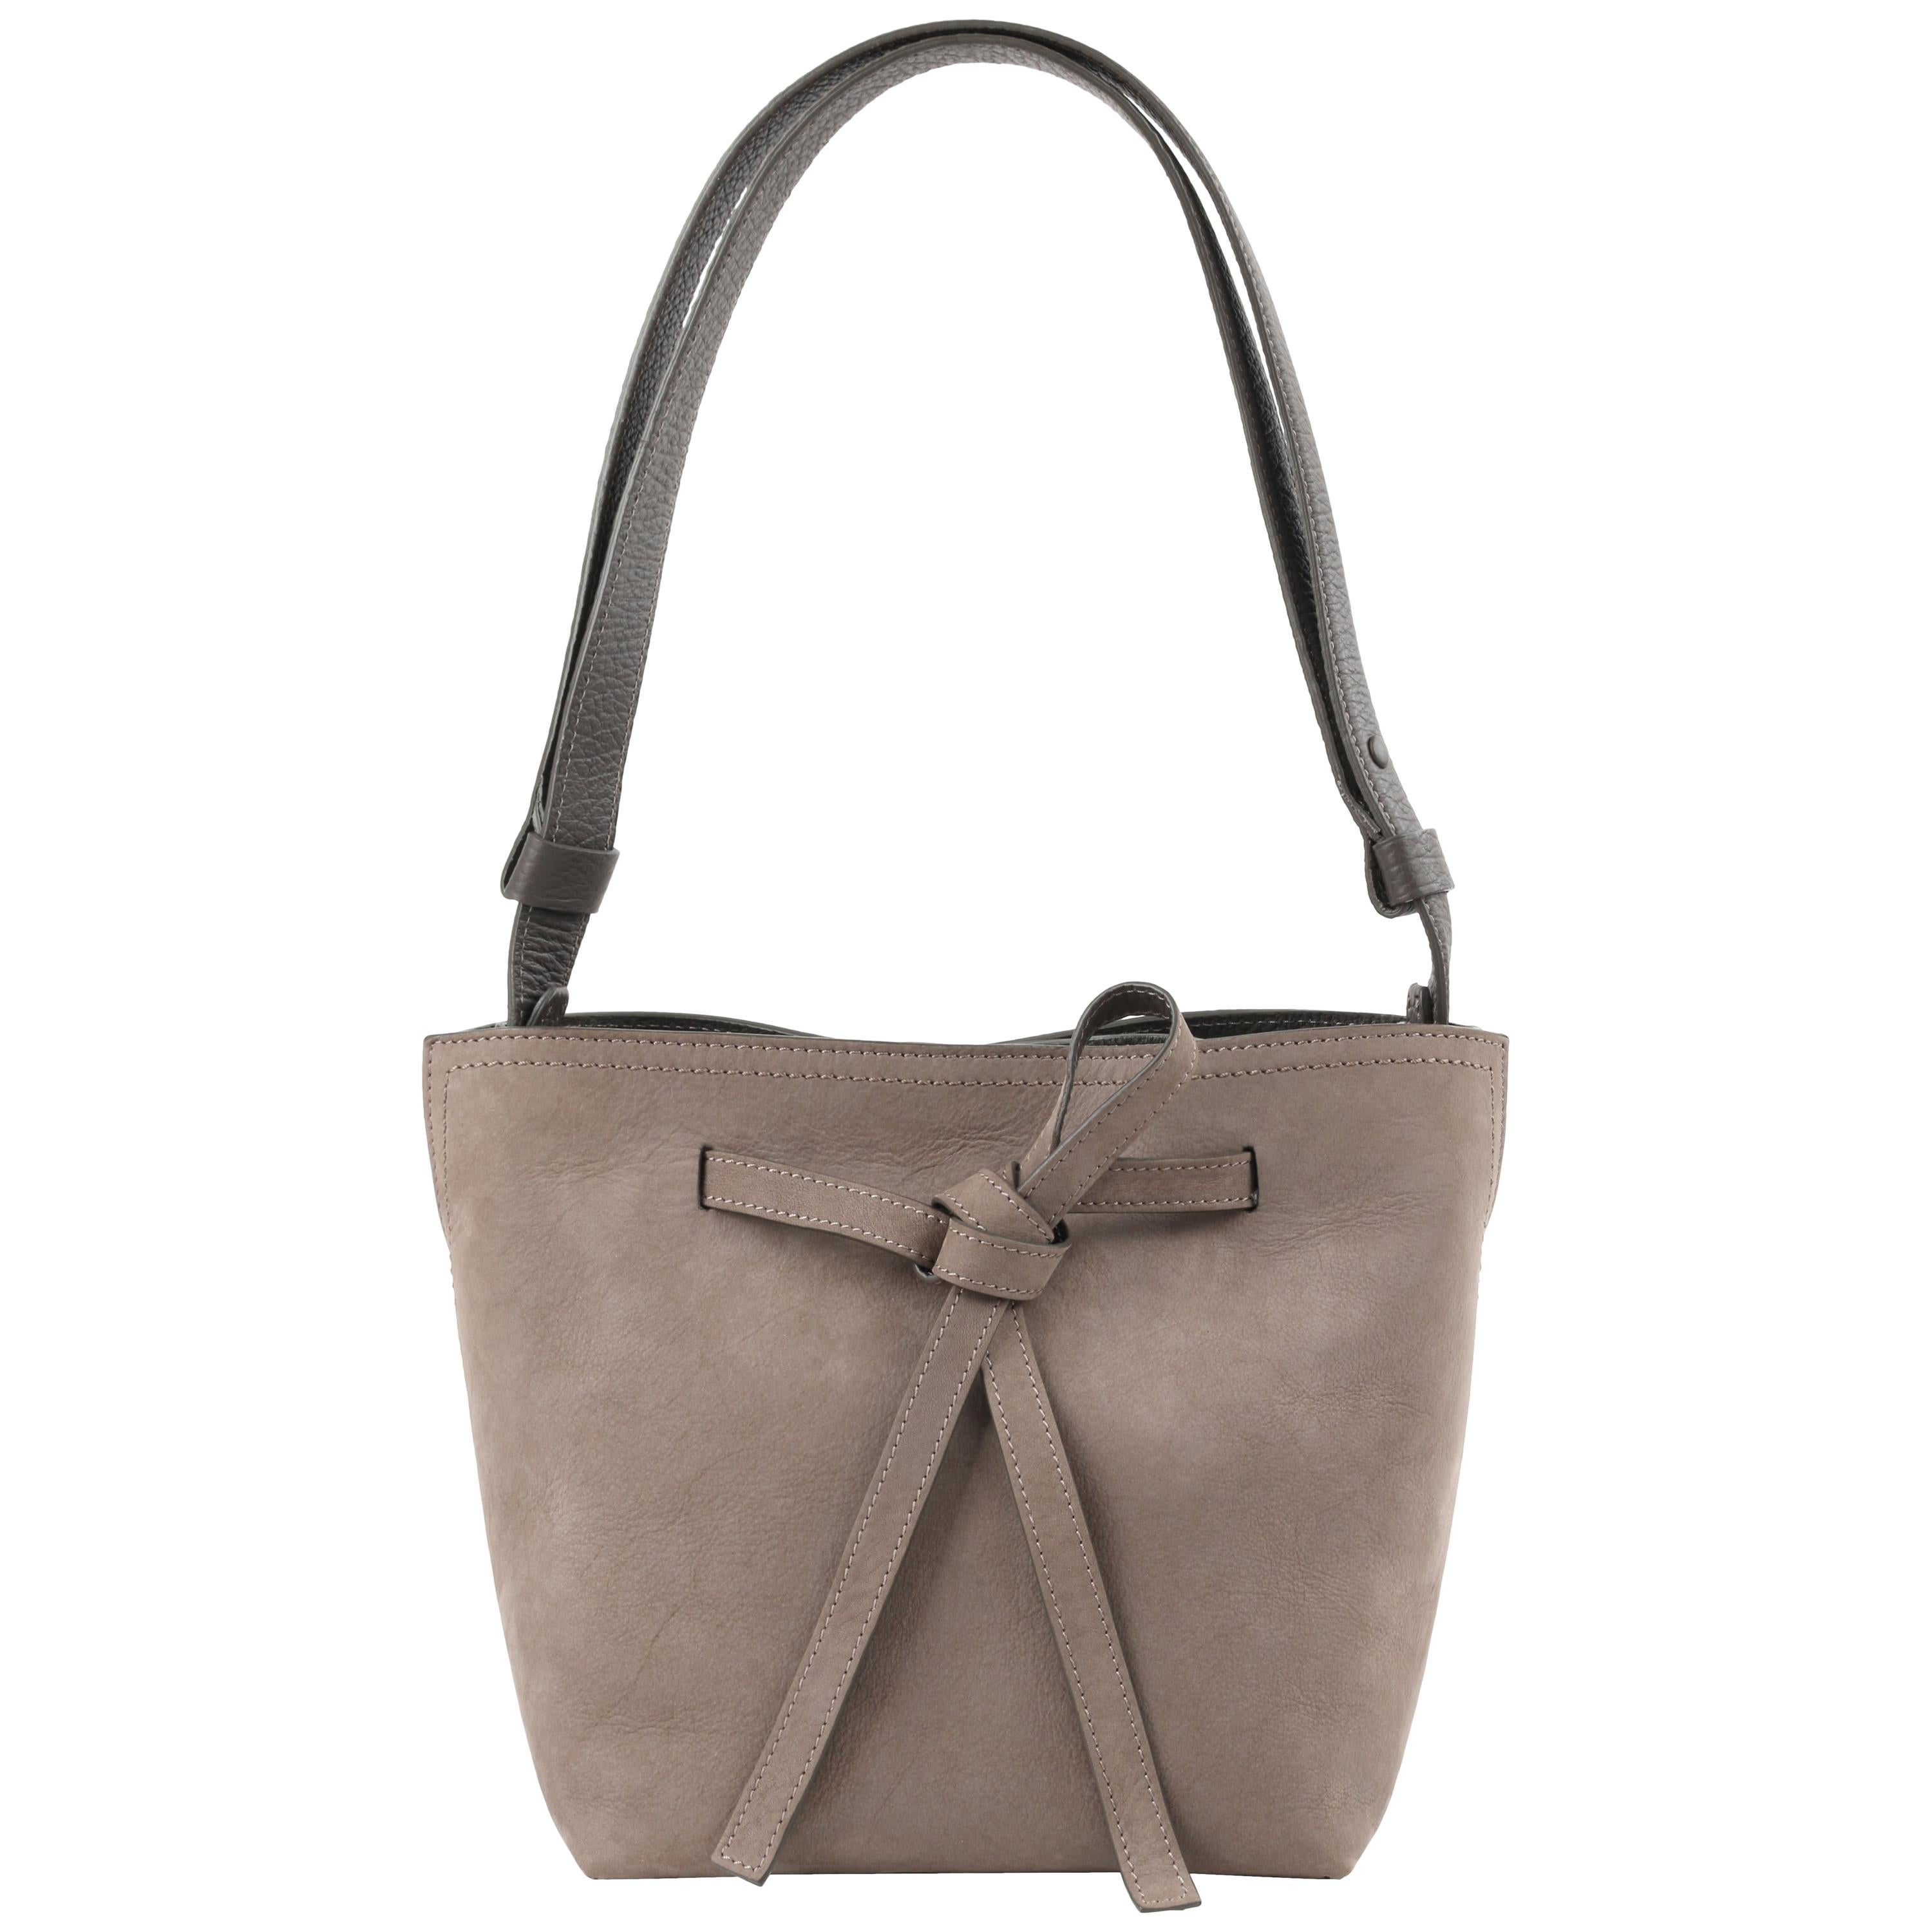 MAISON MARGIELA "Mini Drawstring" Taupe Leather Drawstring Shoulder Bag NWT